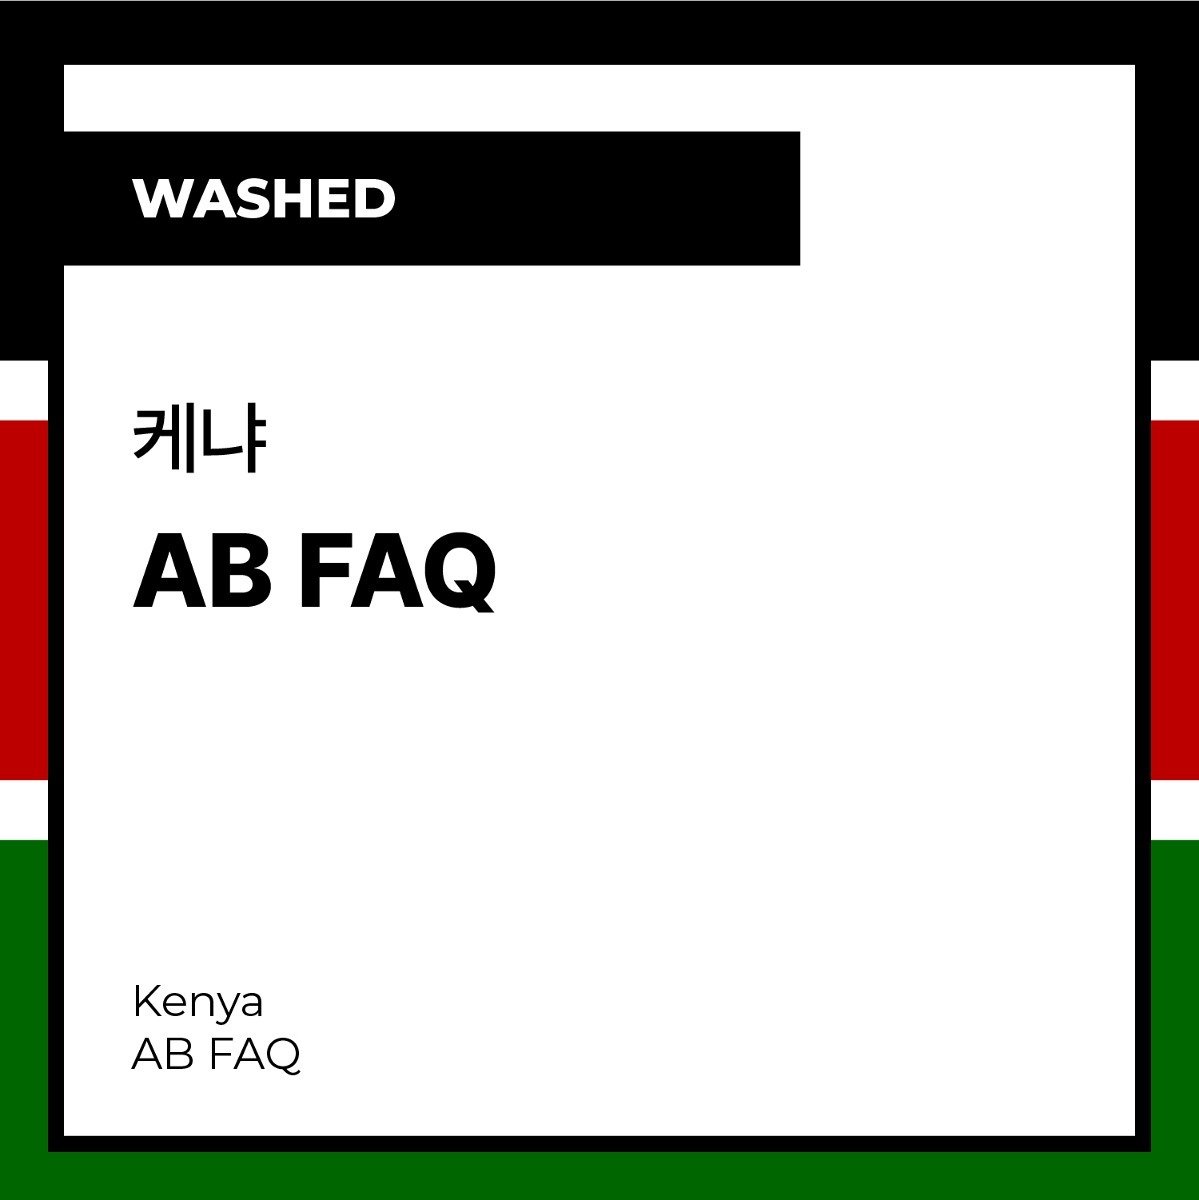 Kenya AB FAQ (Washed) 케냐 AB FAQ (워시드)